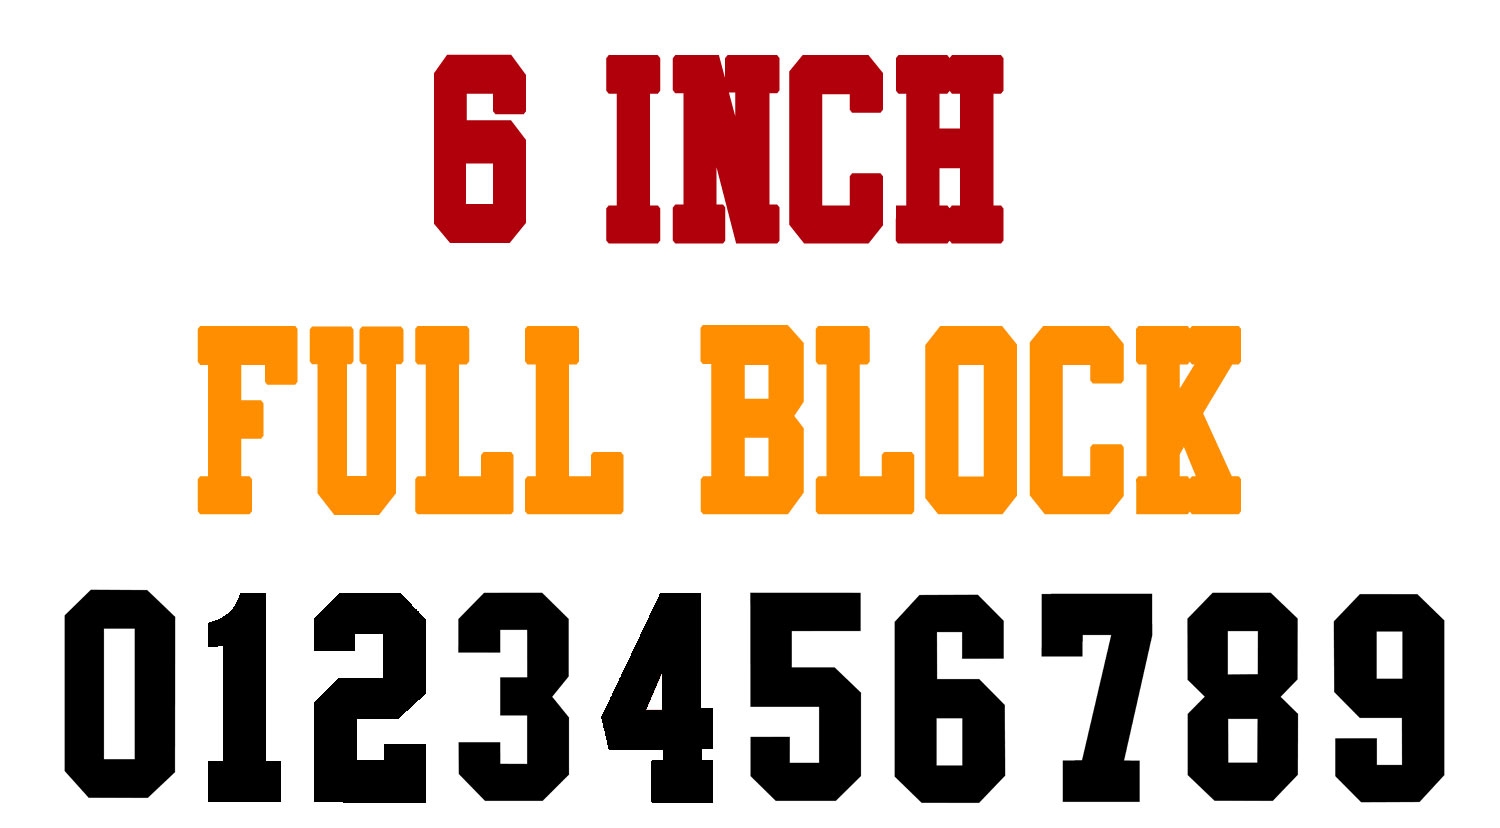 NumberStencils Net 6 Inch Full Block Number Stencils 100 Sheet Packs 6 54 